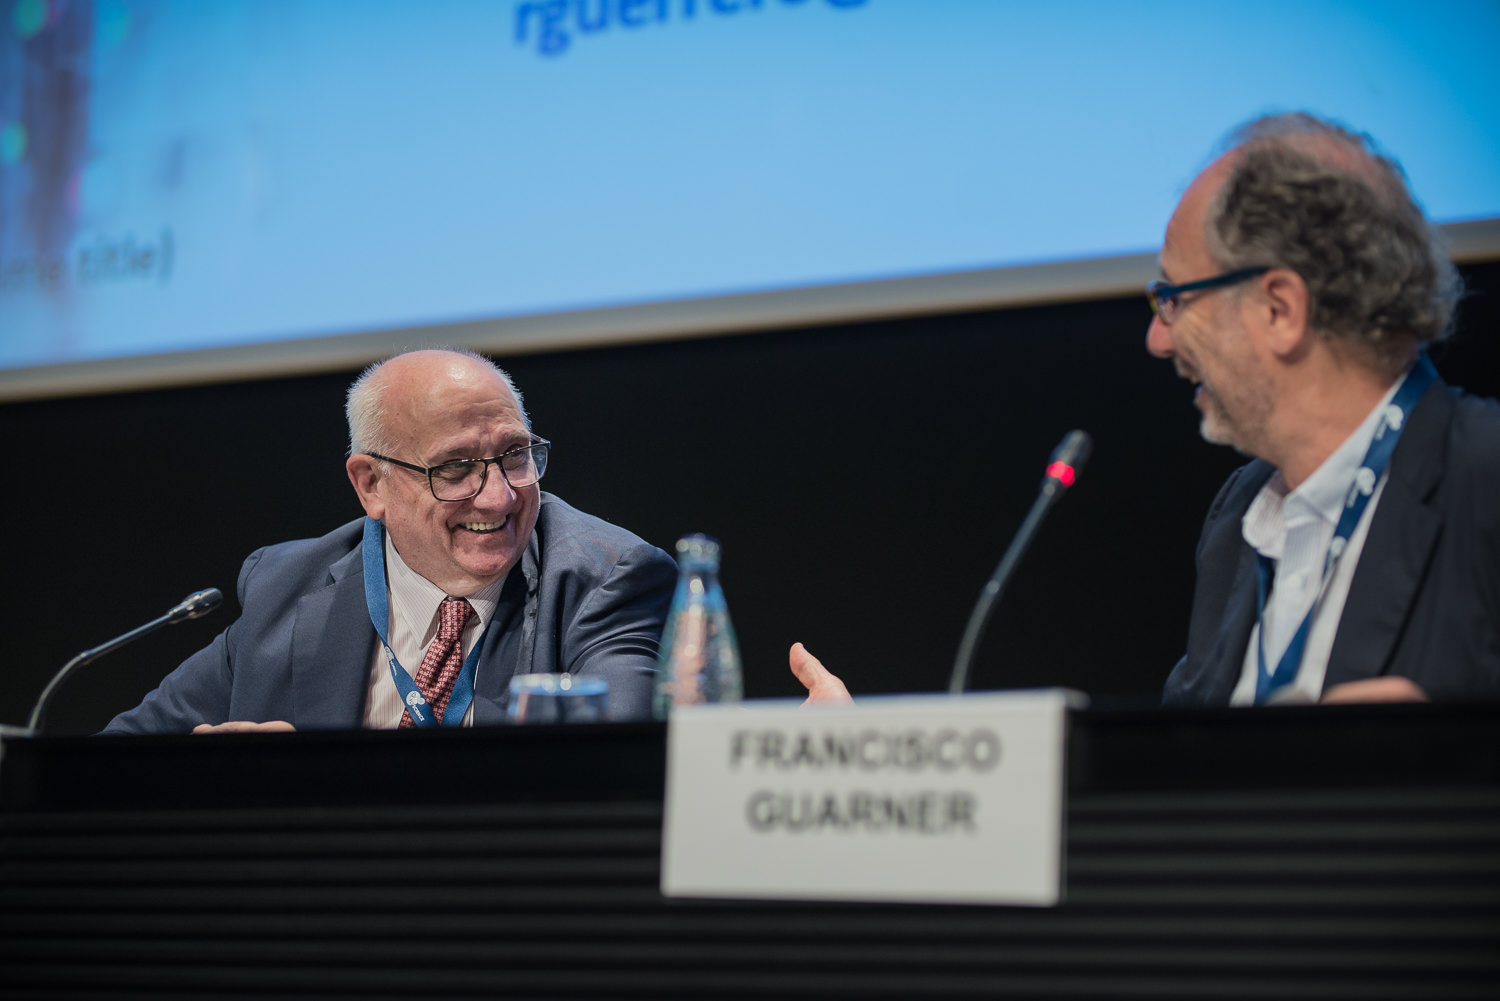 Francisco Guarner and Ricard Guerrero at The Barcelona Debates on the Human Microbiome 2018